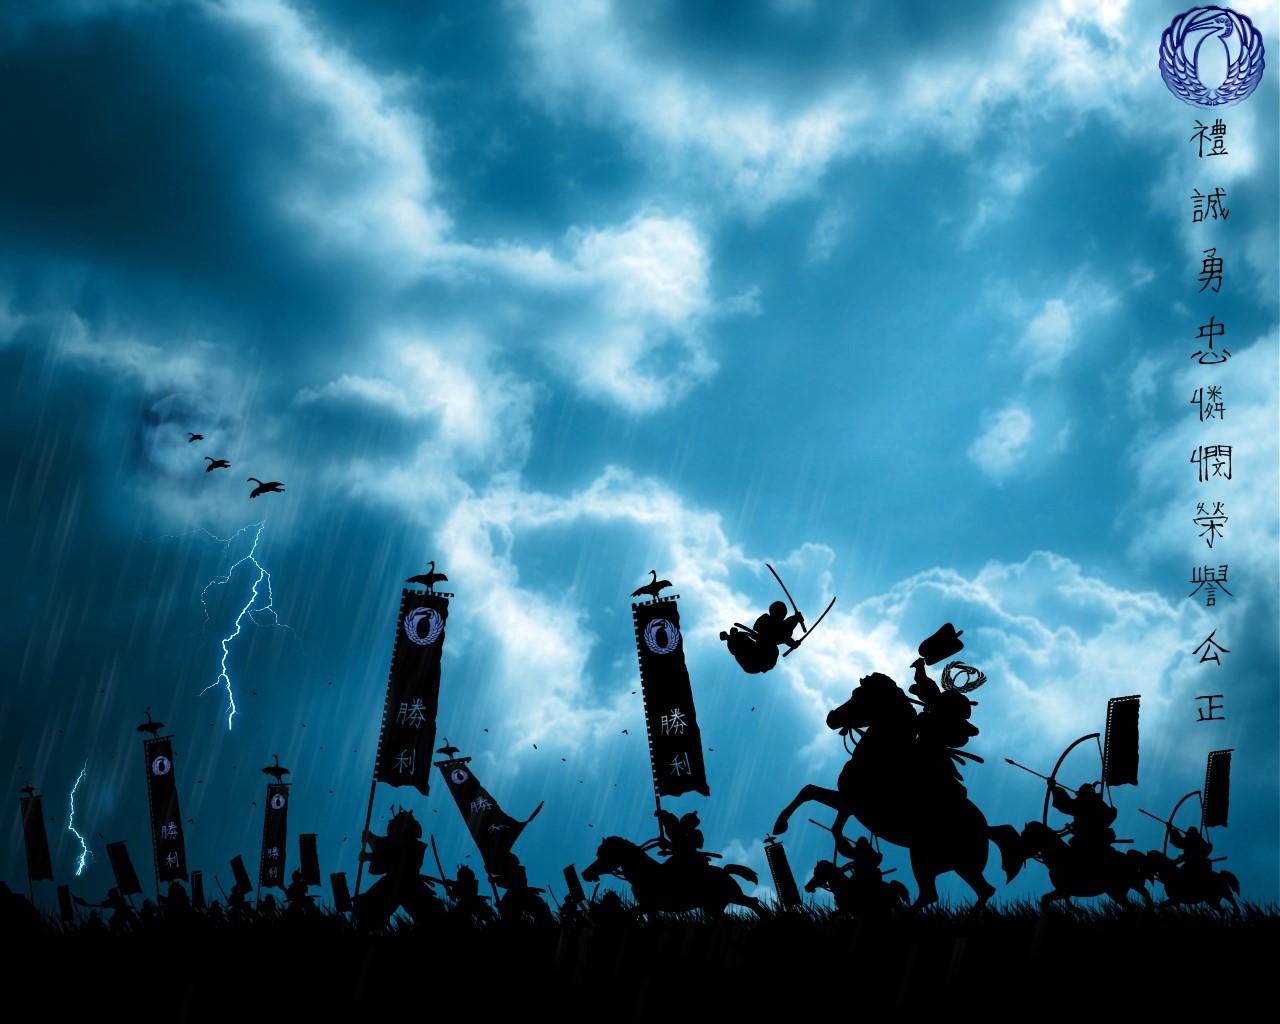 Wallpaper / samurai, fantasy art, battle, sky, storm, blue free download